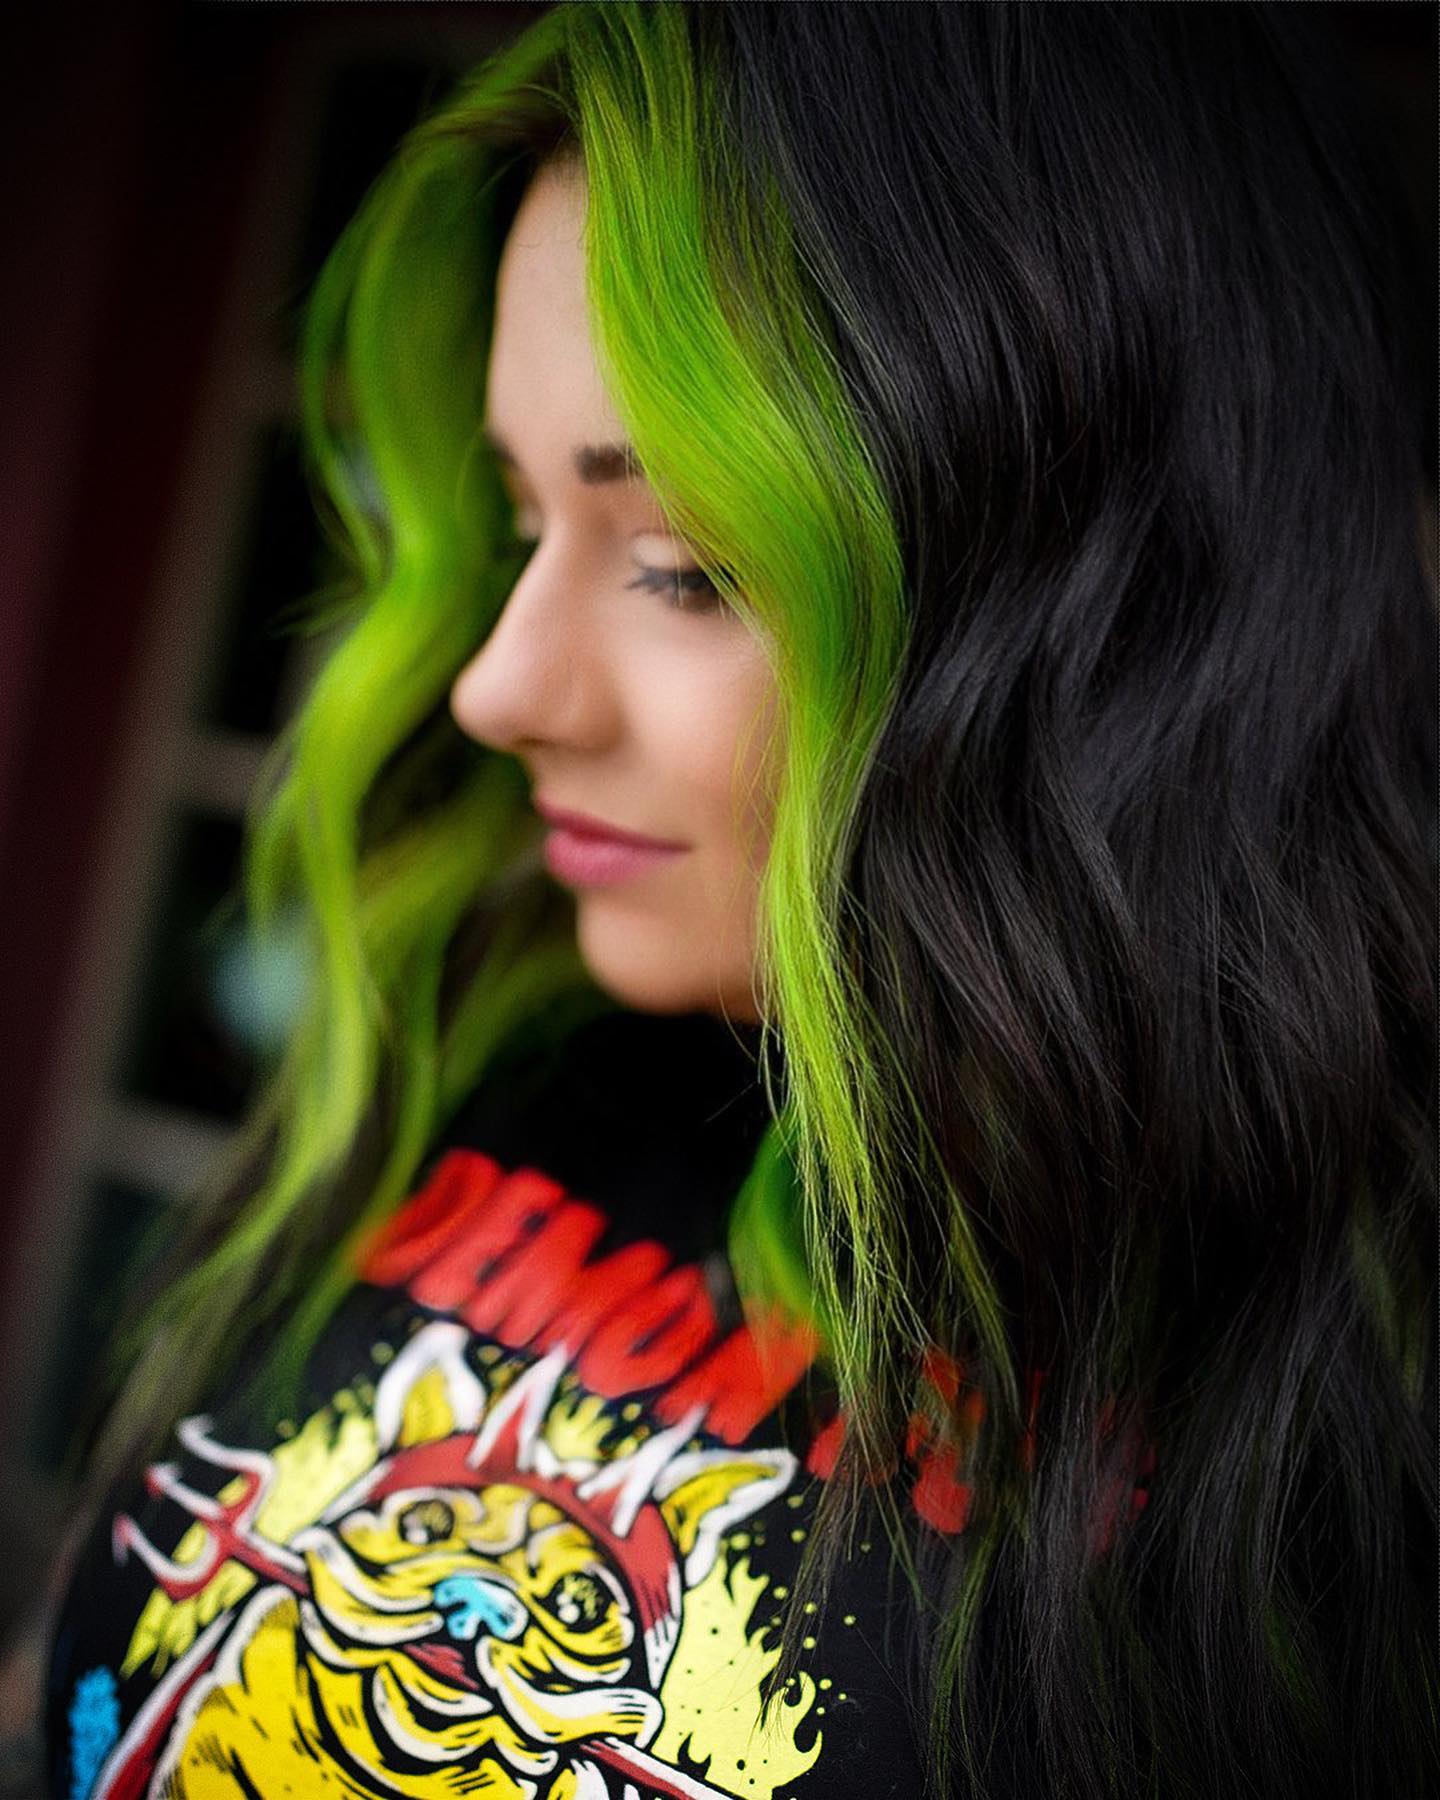 Neon Green Hair Streaks